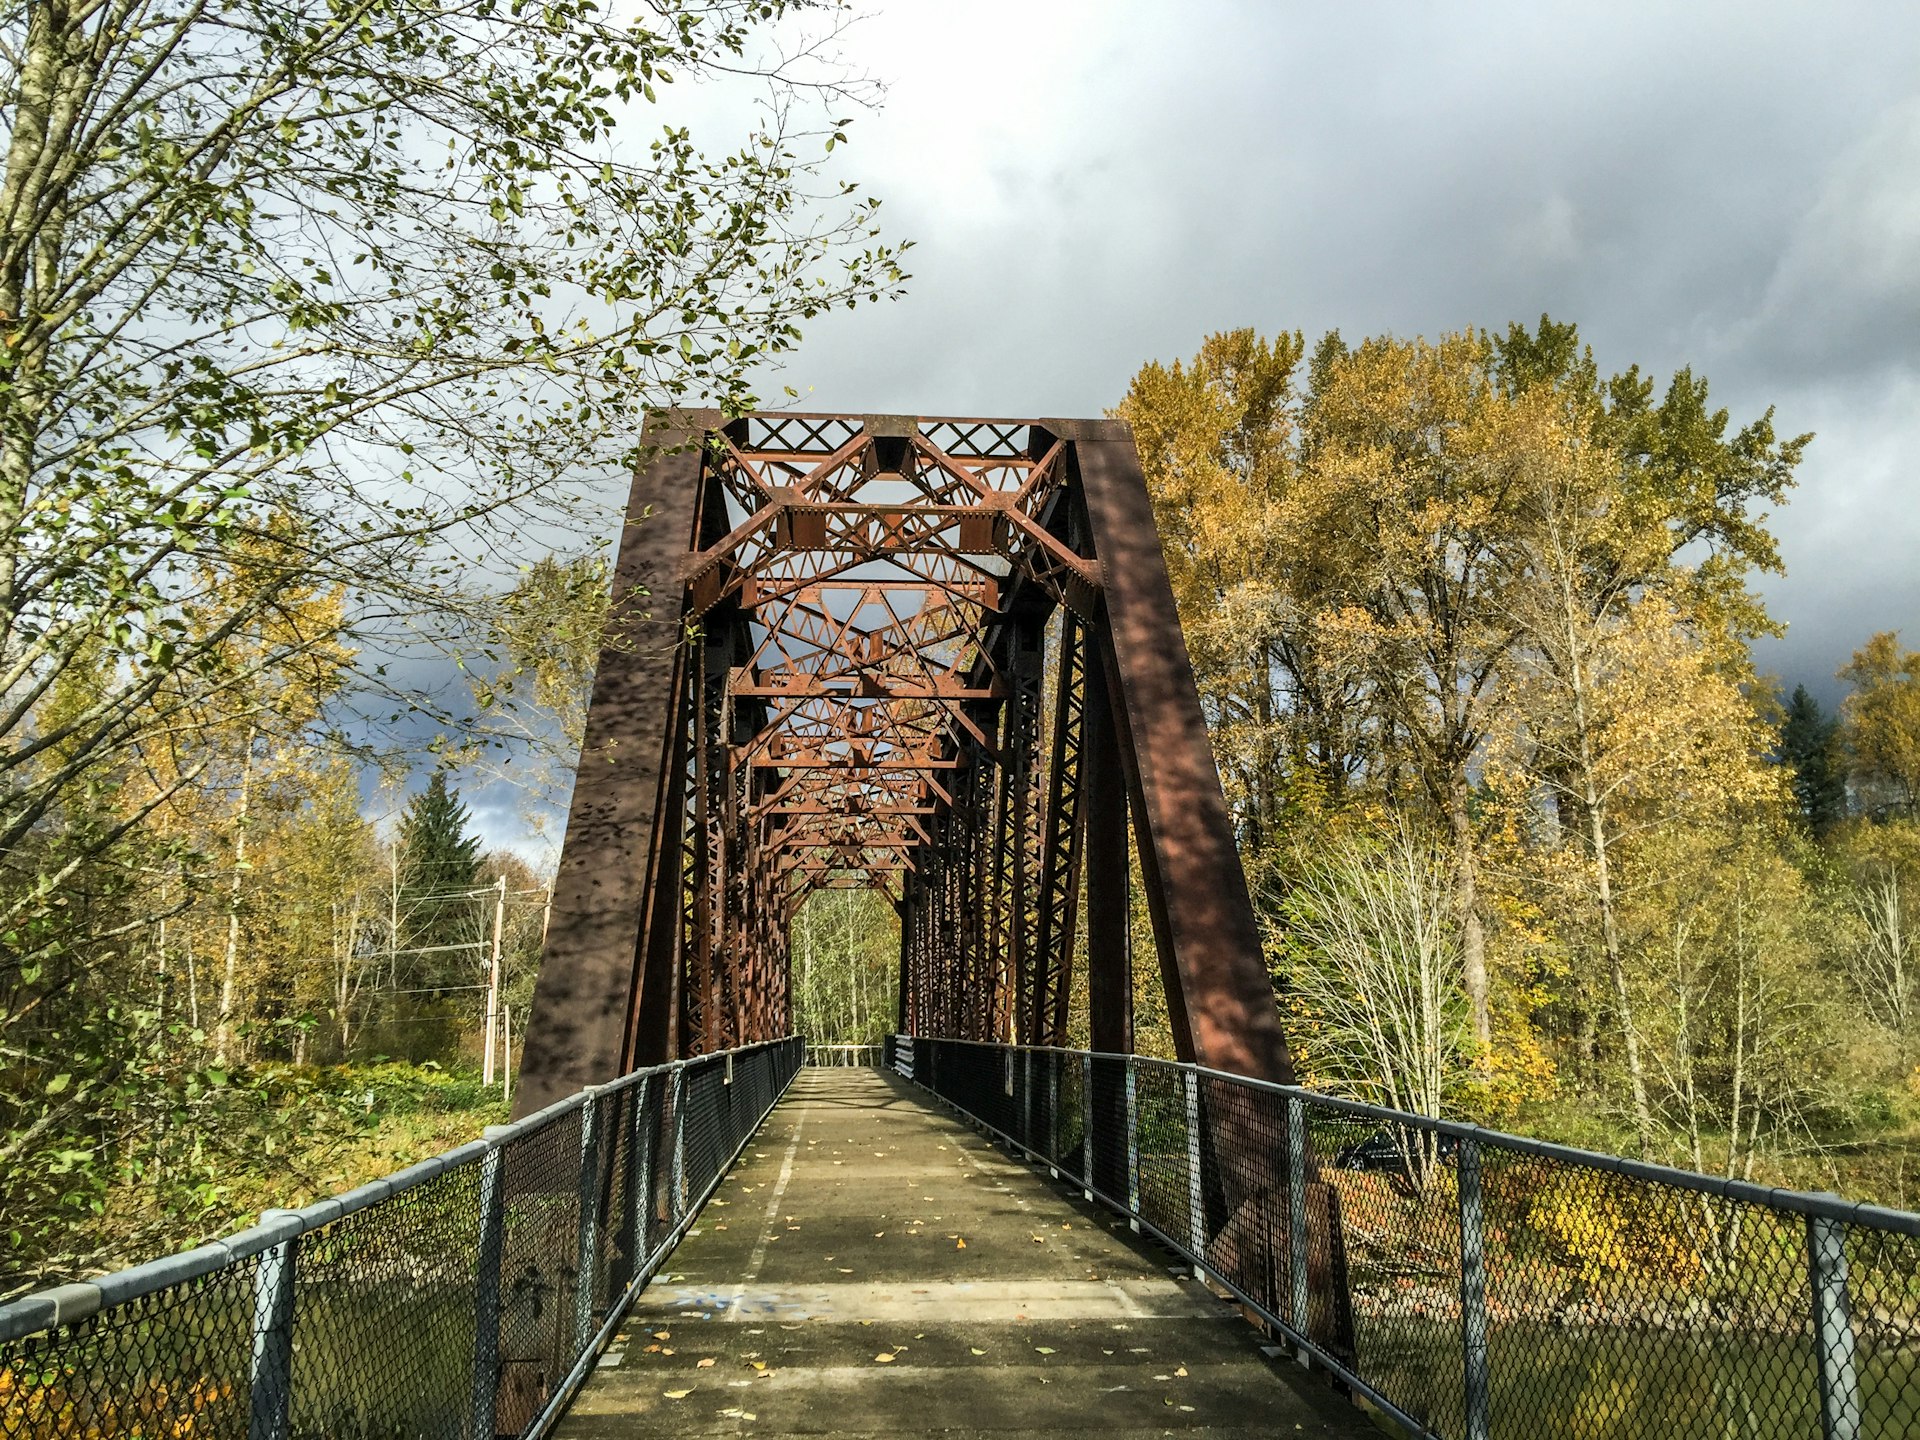 Ronette's Bridge, a former railroad bridge in Snoqualmie © Tim Richards / Lonely Planet